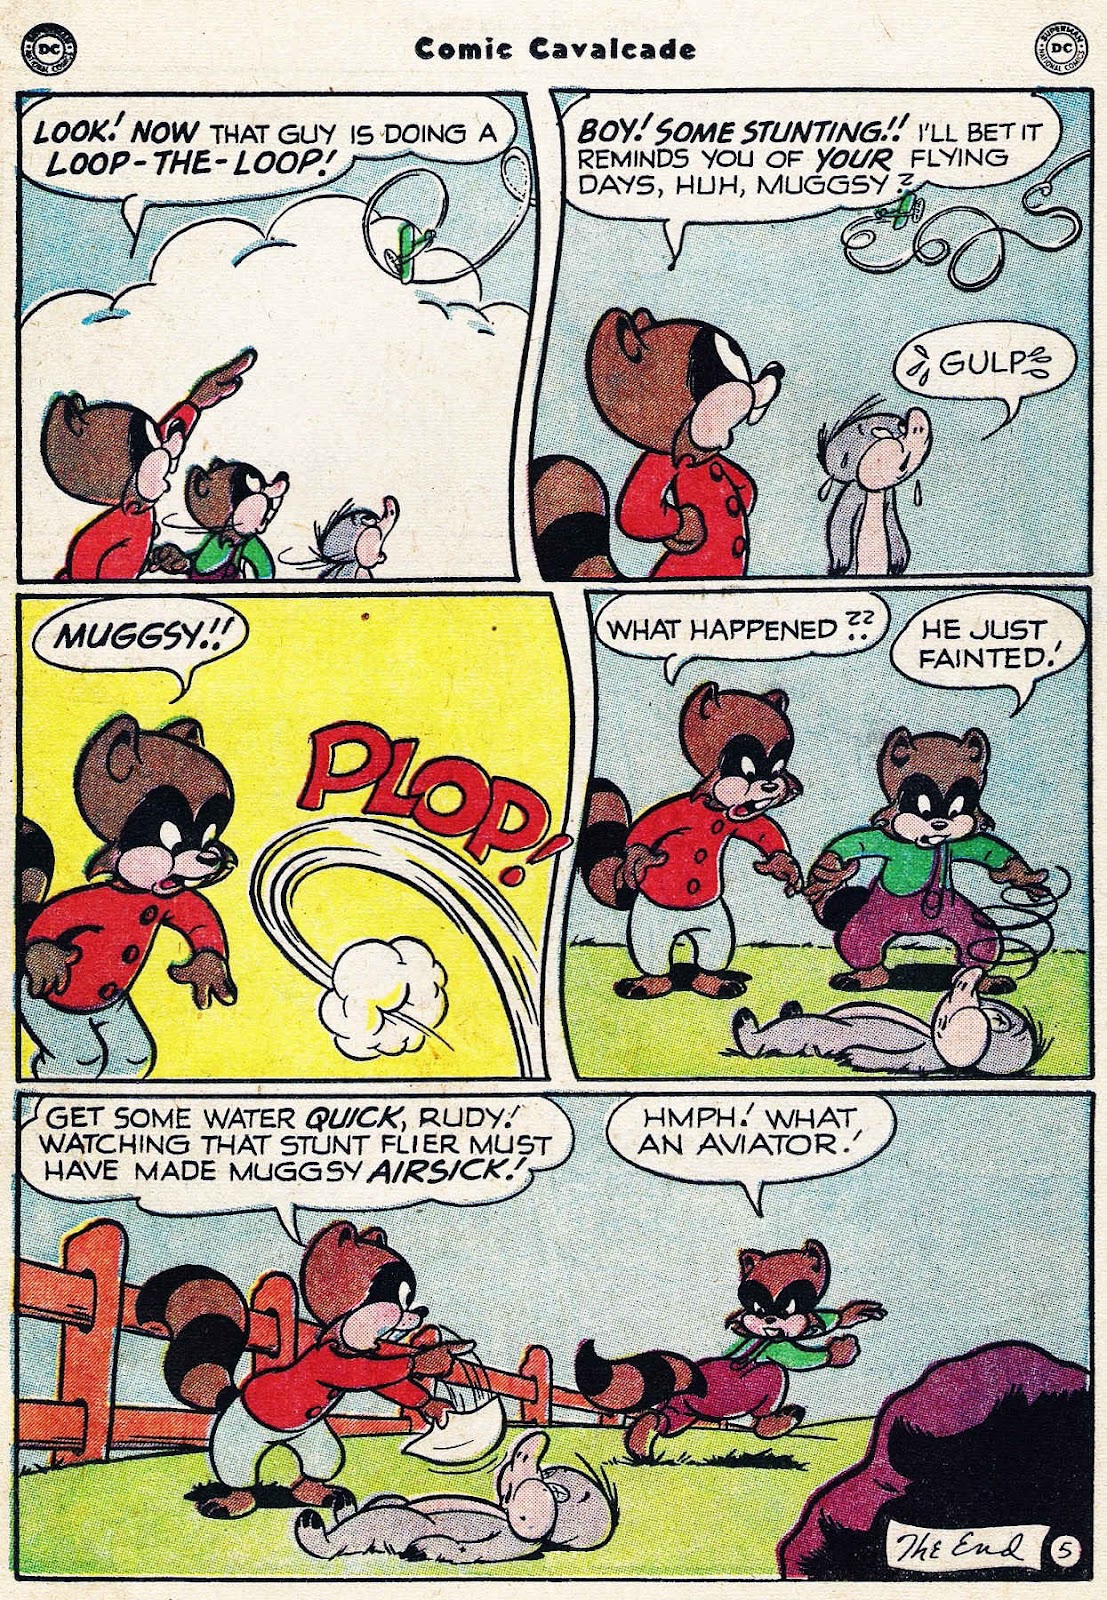 Comic Cavalcade issue 37 - Page 24